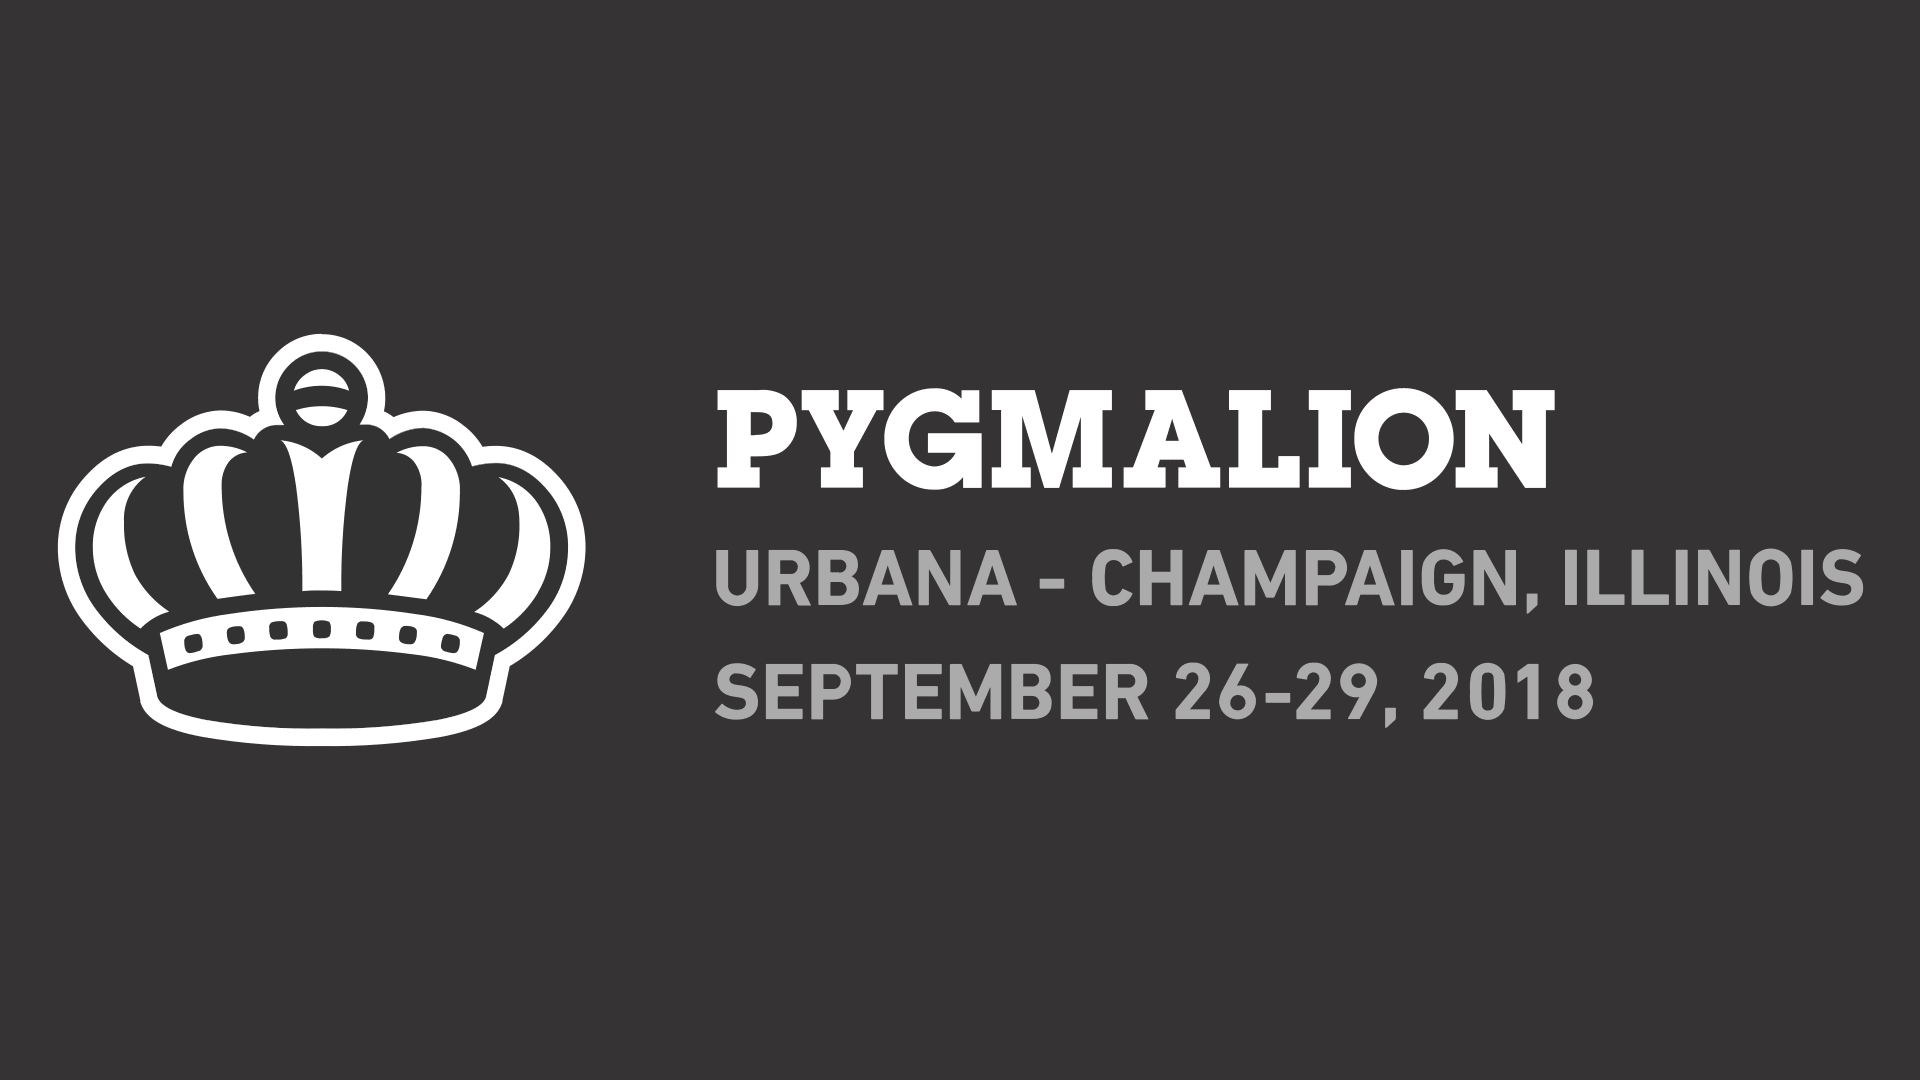 Pygmalion logo - Urbana-Champaign, Illinois; September 26-29, 2018